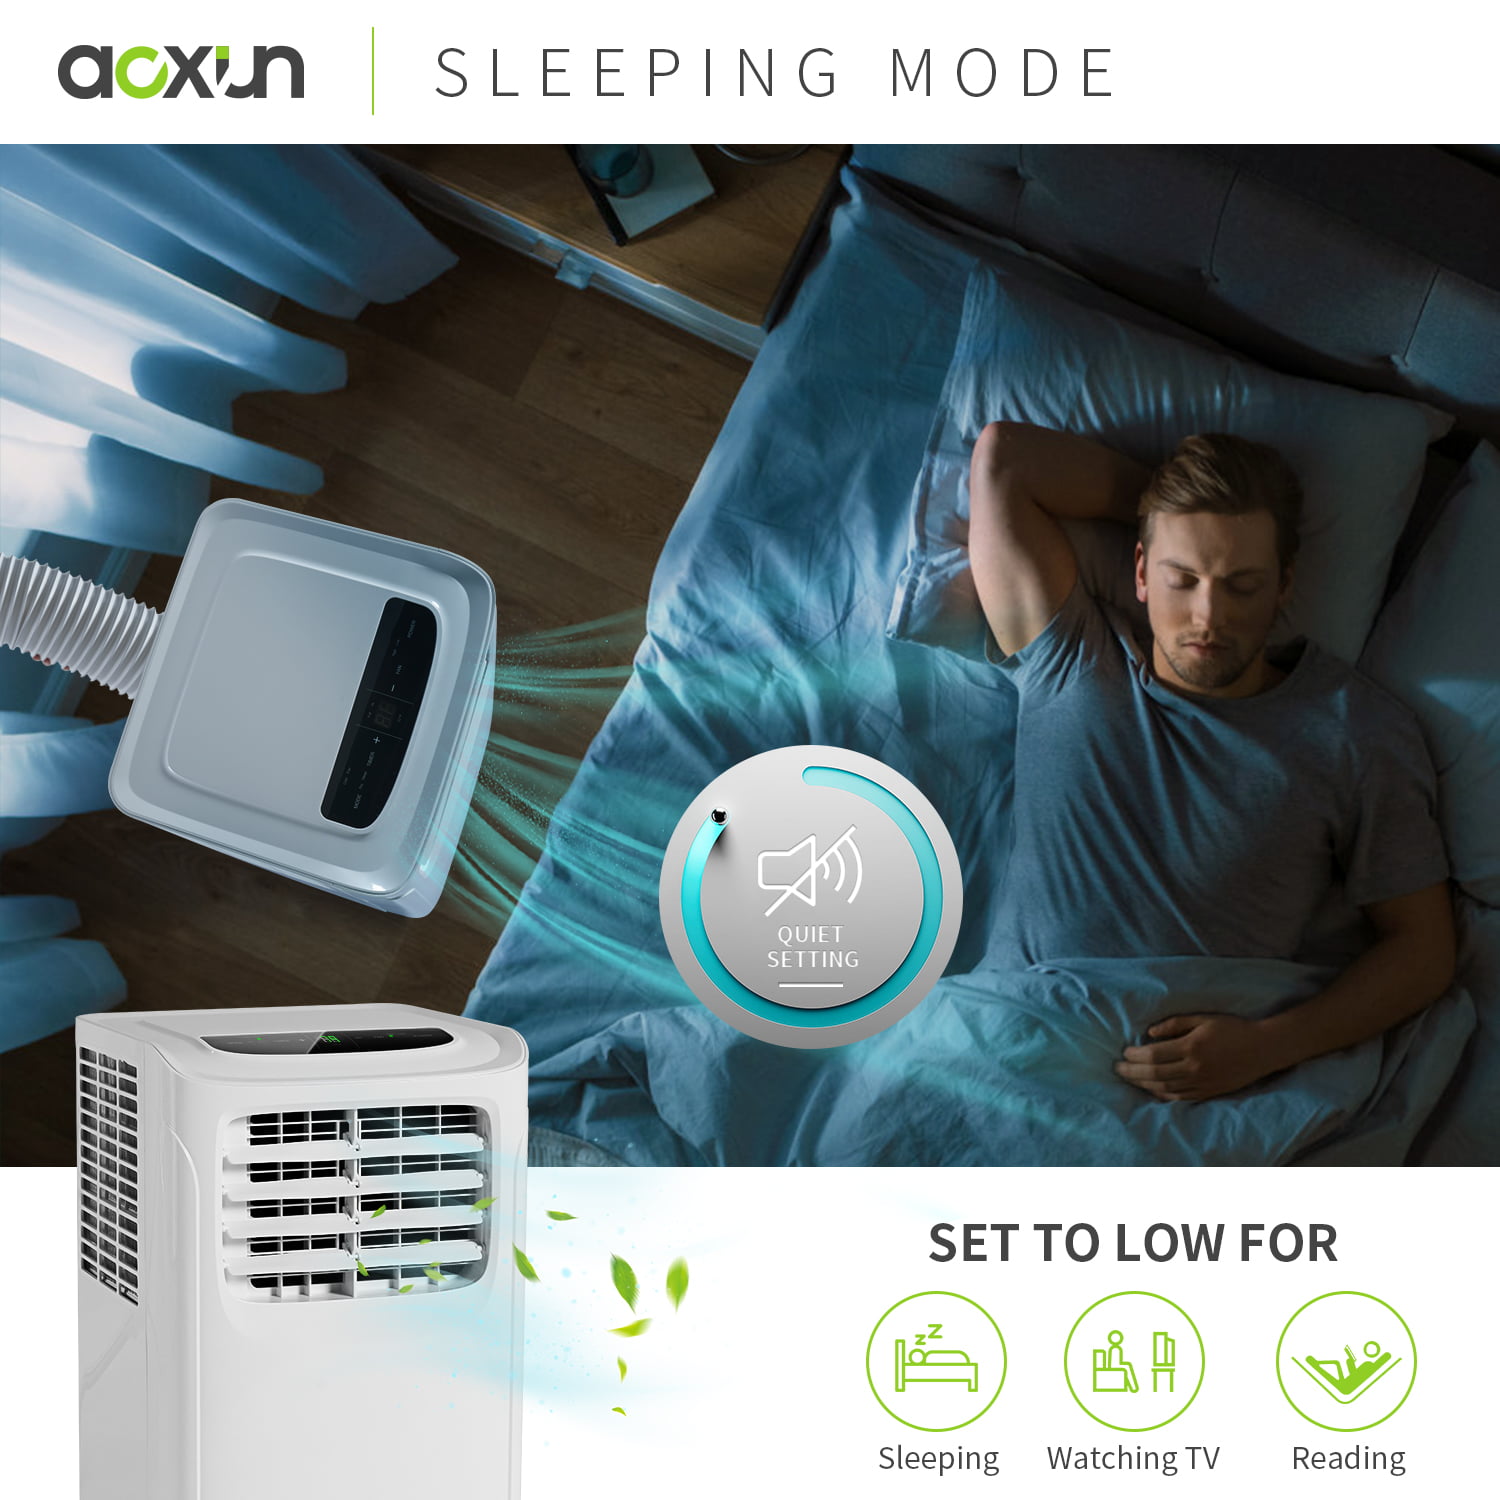 Aoxun 9700 BTU Portable Air Conditioner w/ Dehumidifier Function & Fan Mode  w/ Window Kit, 3-in-1 Functions/Digital Display/24 Hrs Timer/Caster Wheels  